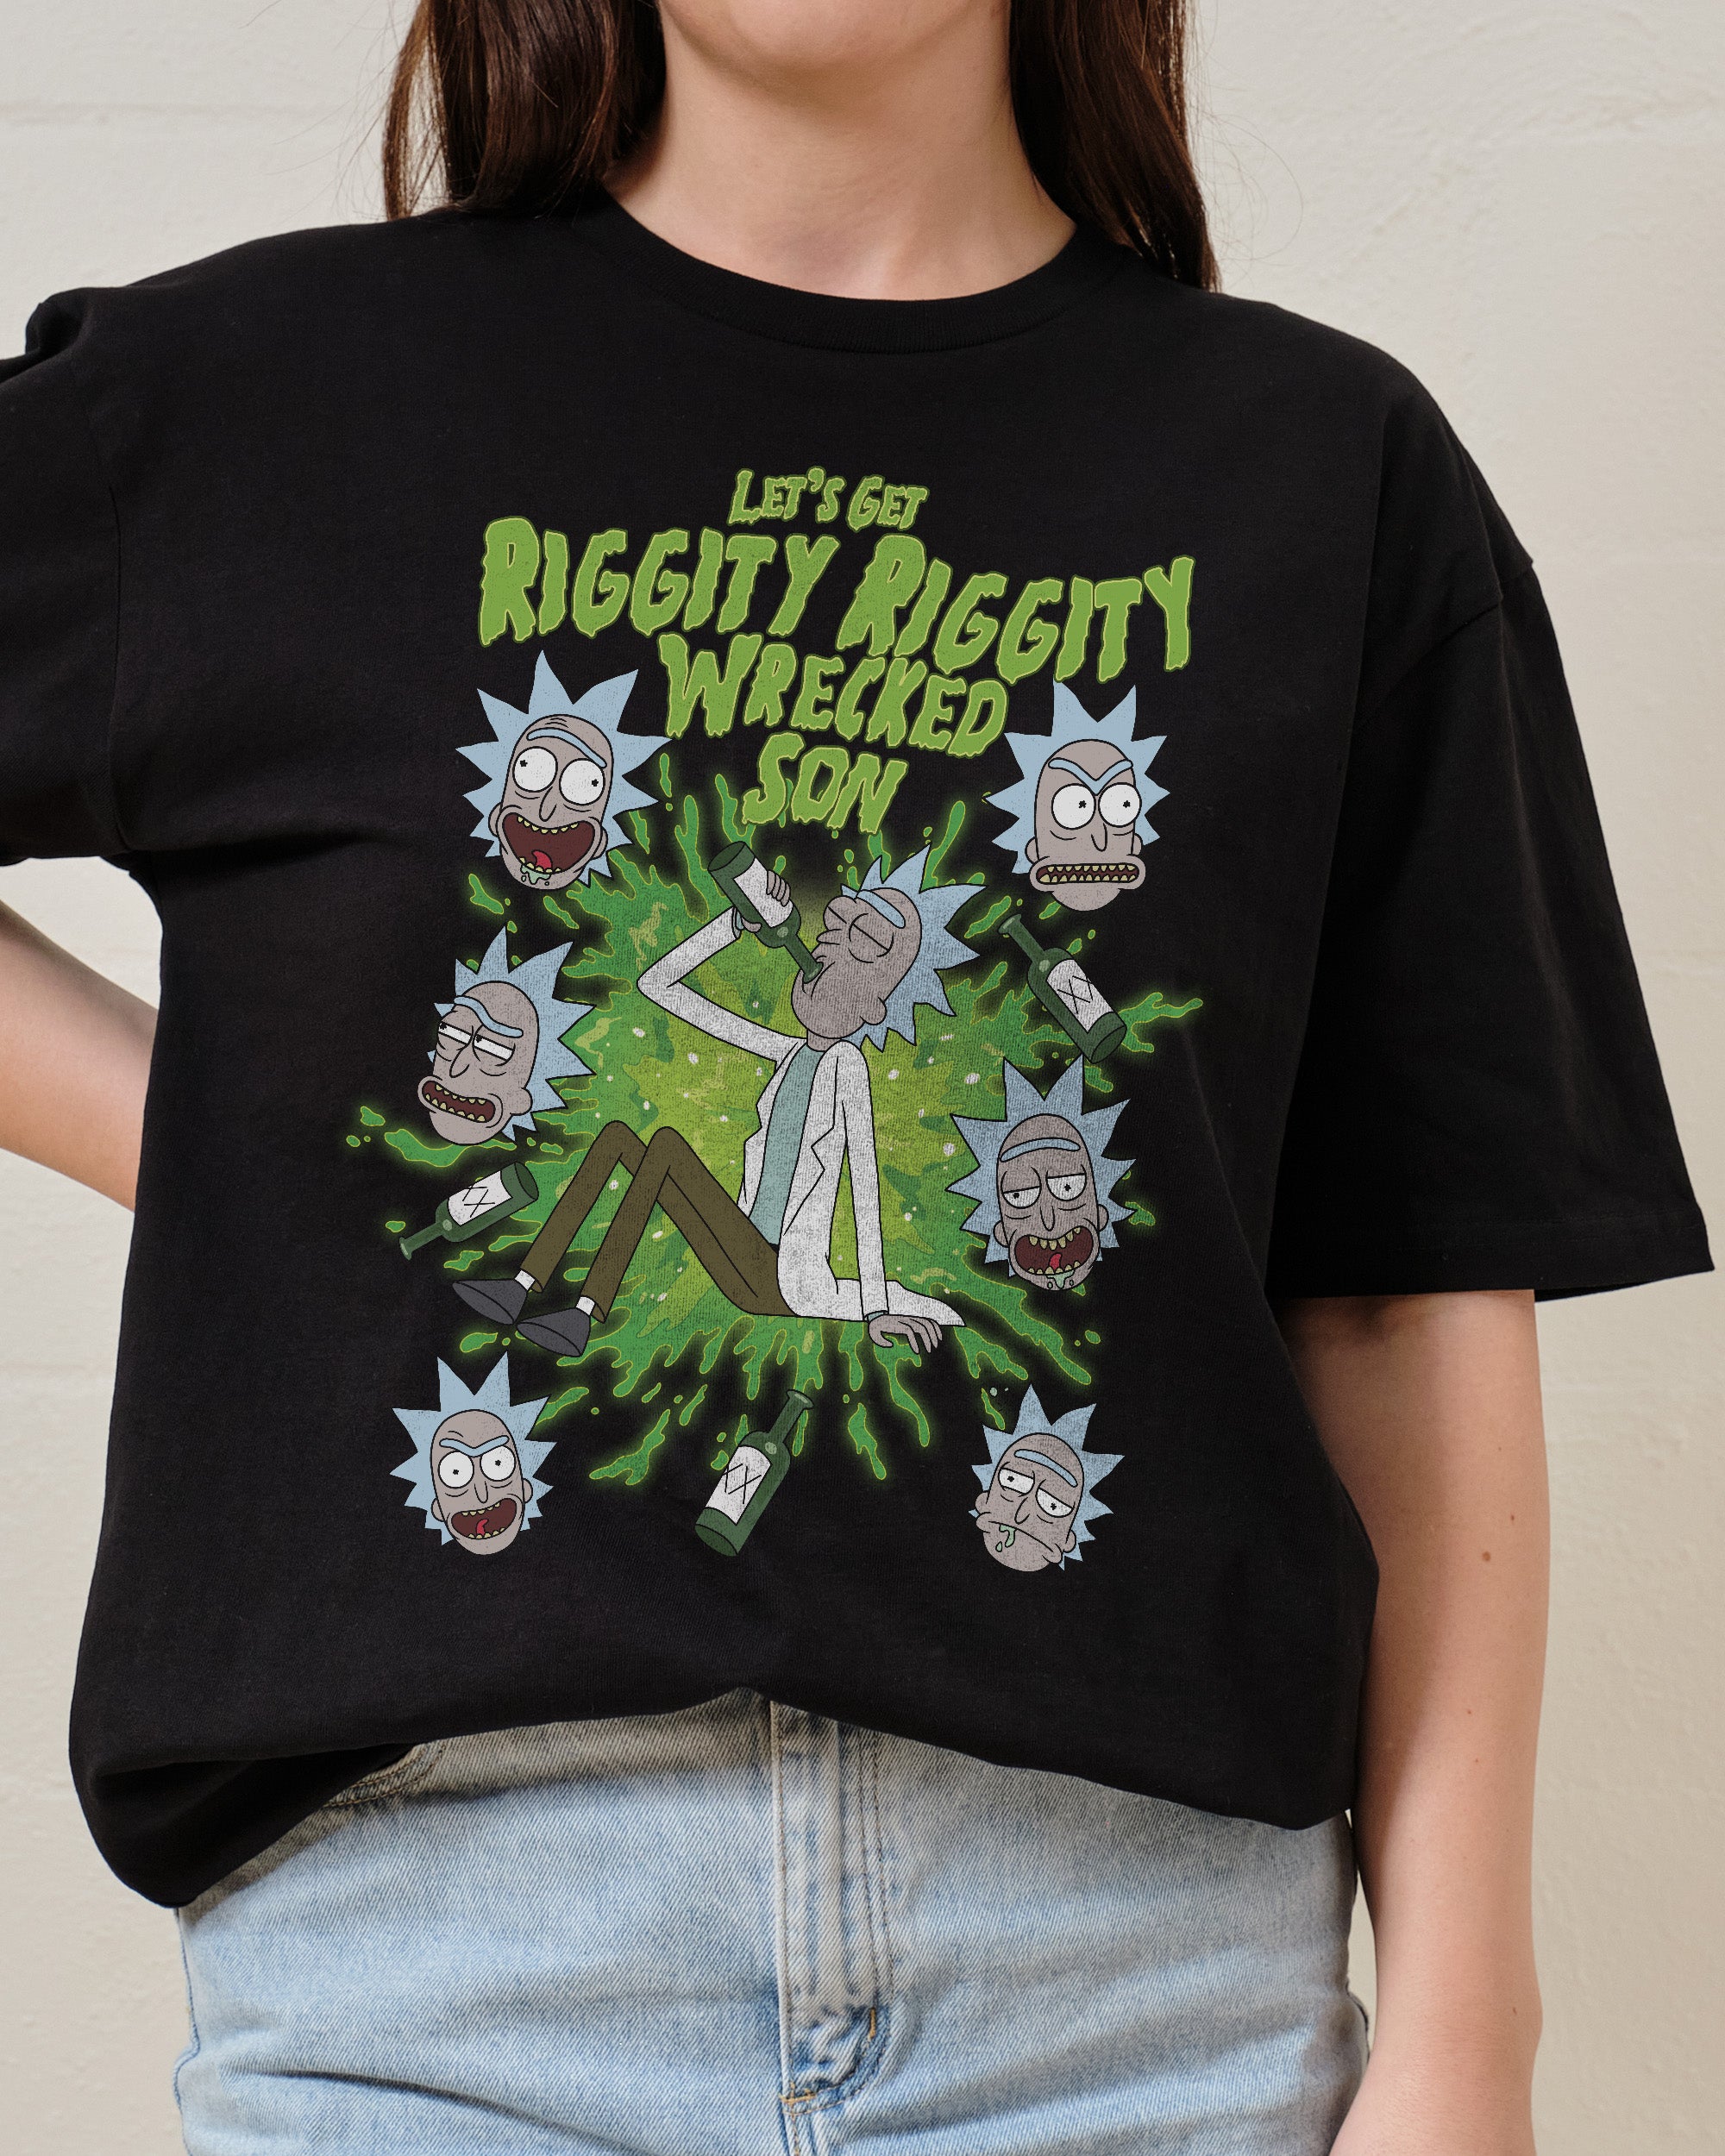 Riggity Riggity Wrecked T-Shirt